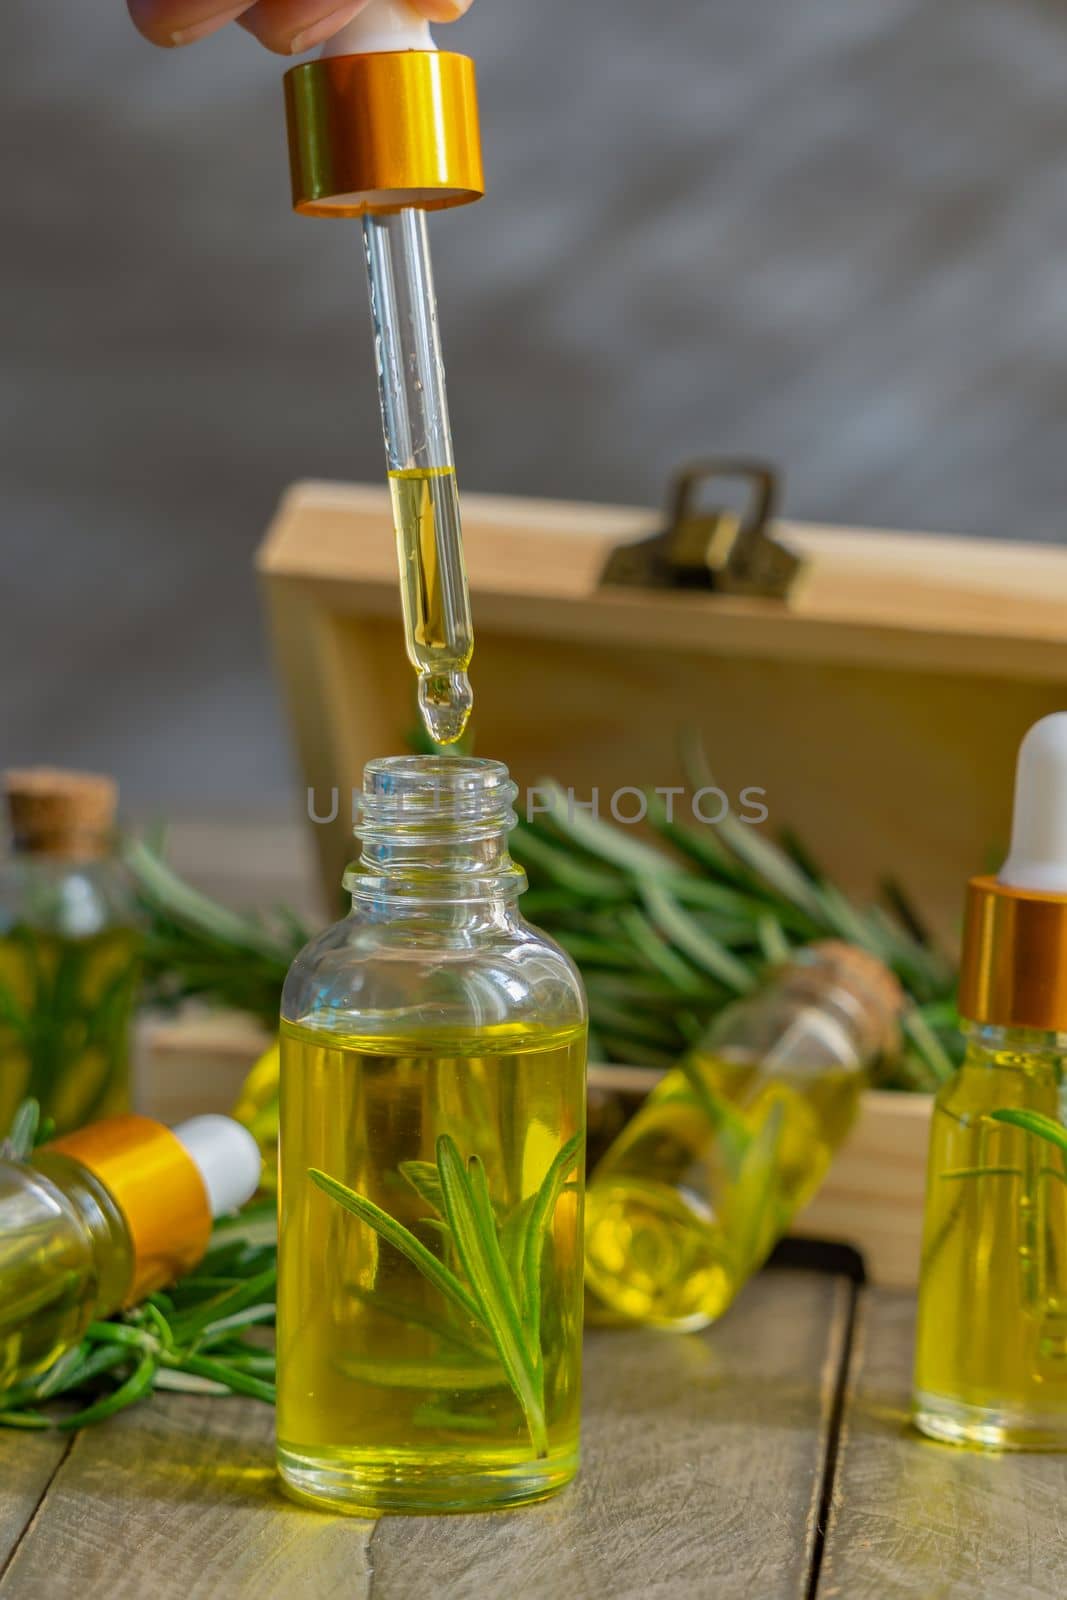 rosemary essential oils for skin treatment by joseantona